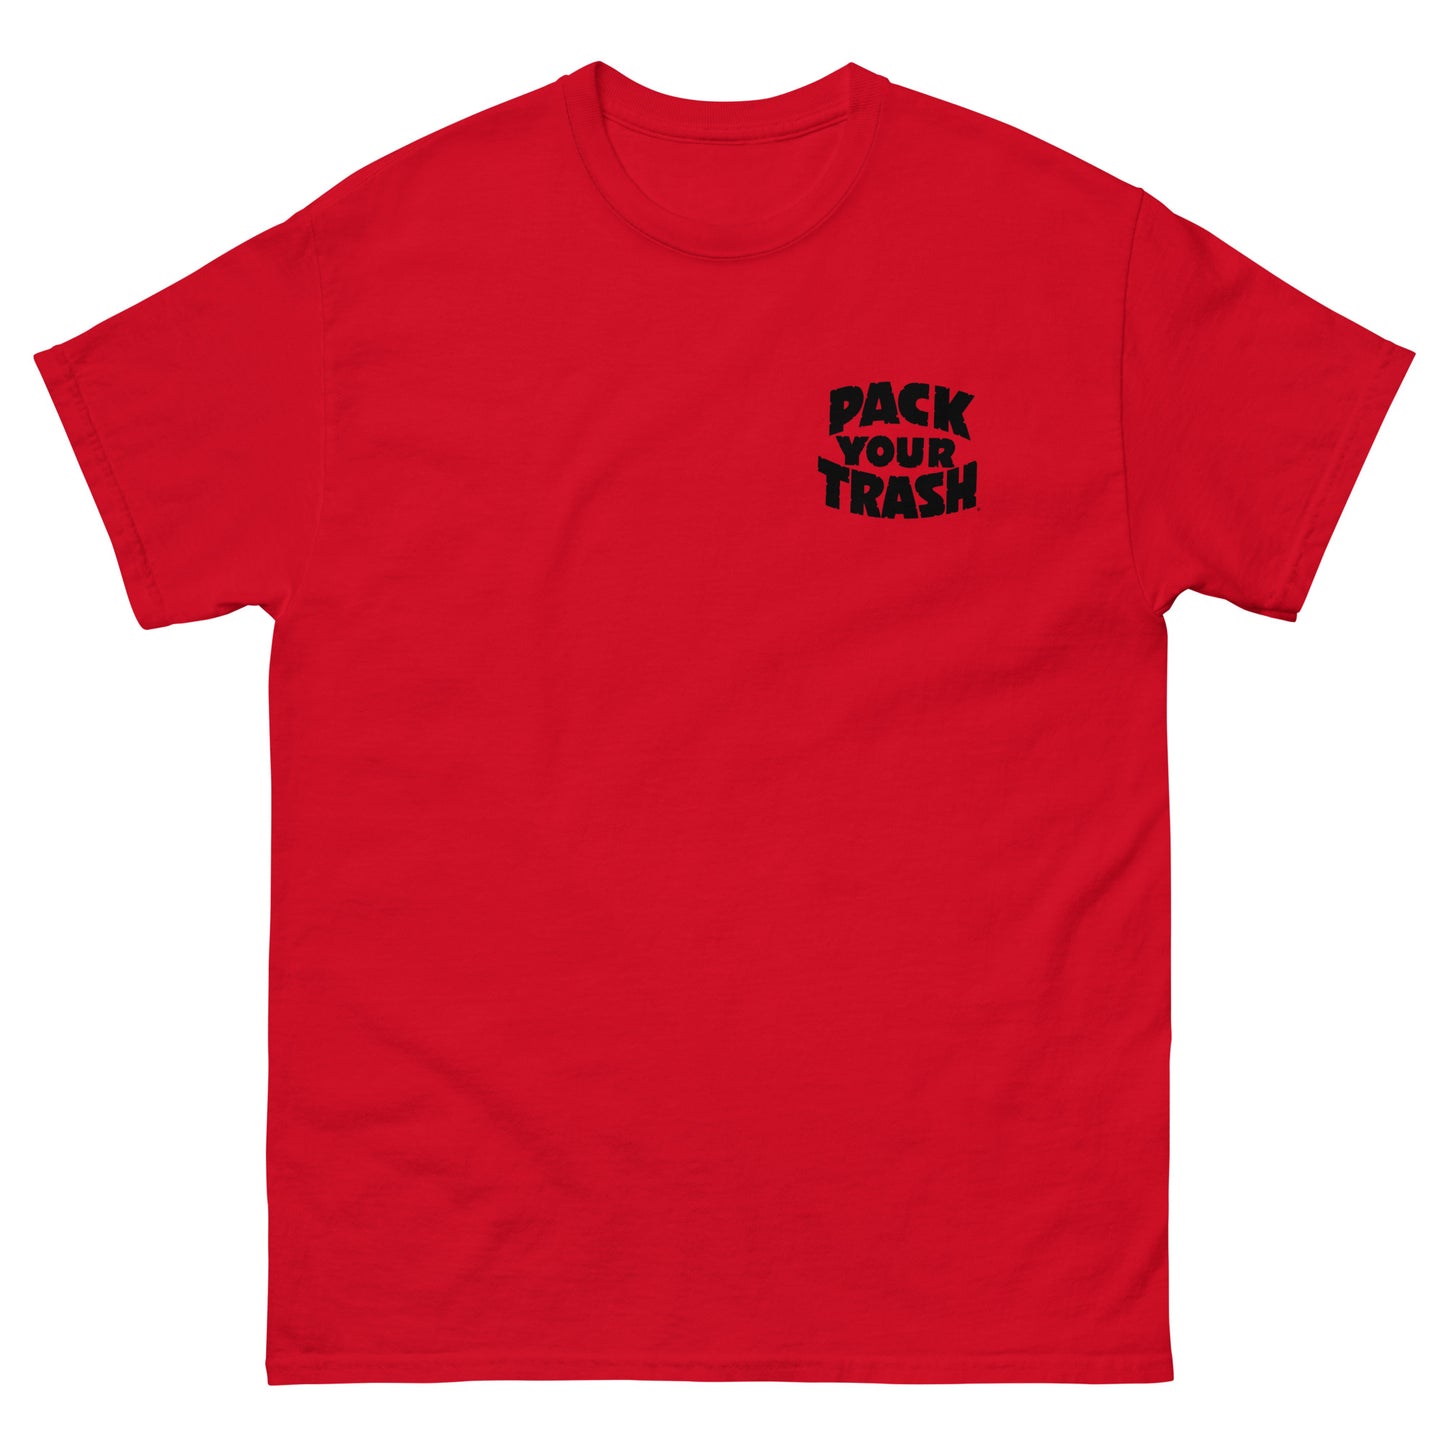 Pack Your Trash - Surf Geek - Dark Print on Light Shirt - Men's classic tee